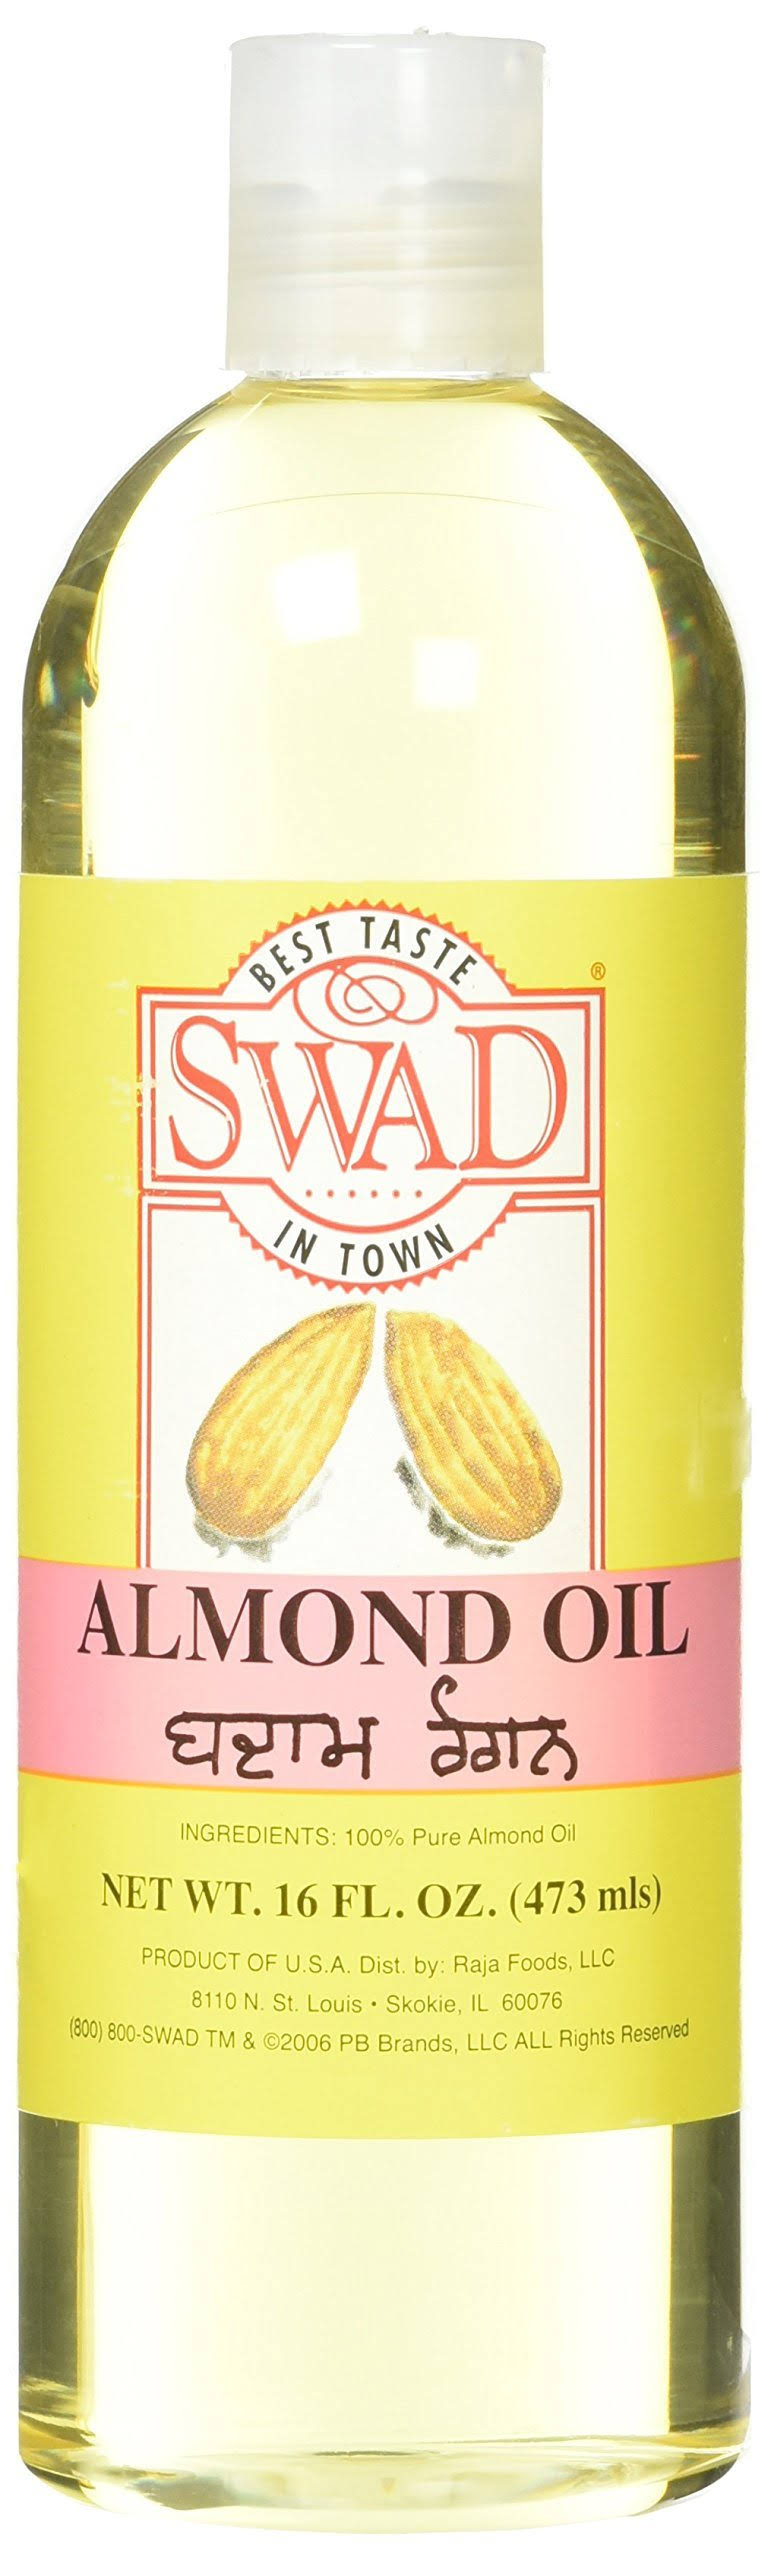 Great Bazaar Swad Almond Oil - 16oz